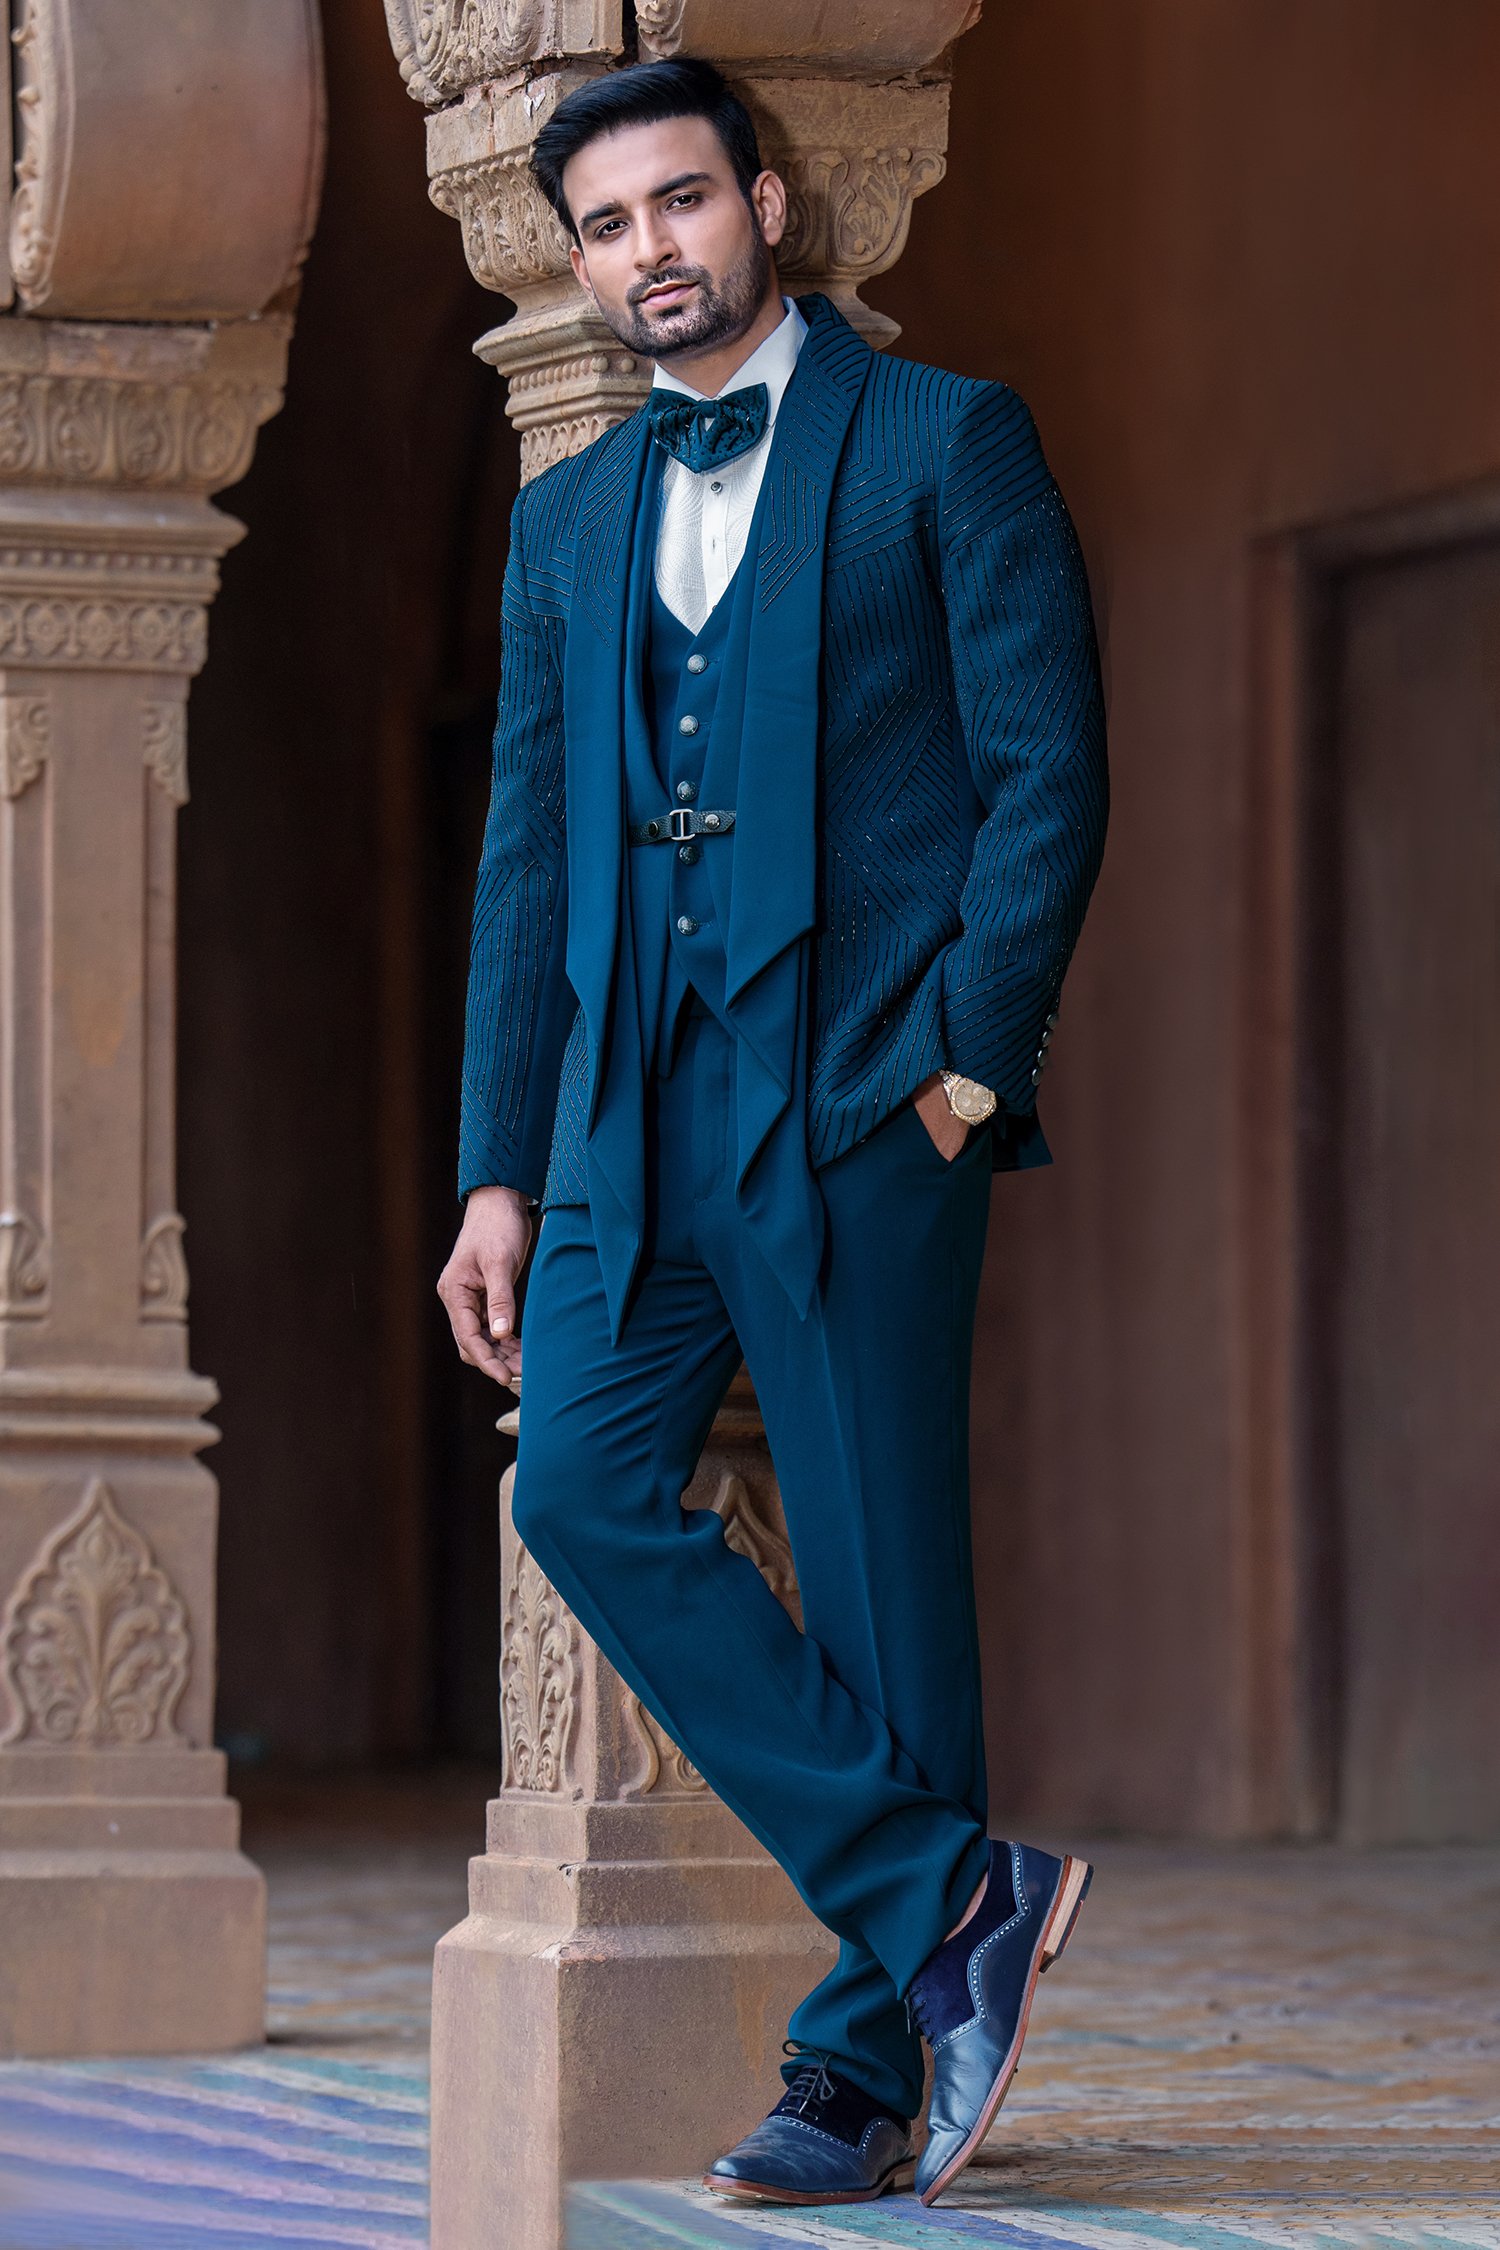 Nawabi Suit Men 2020 | Fashion, Mens wear wedding, How to wear